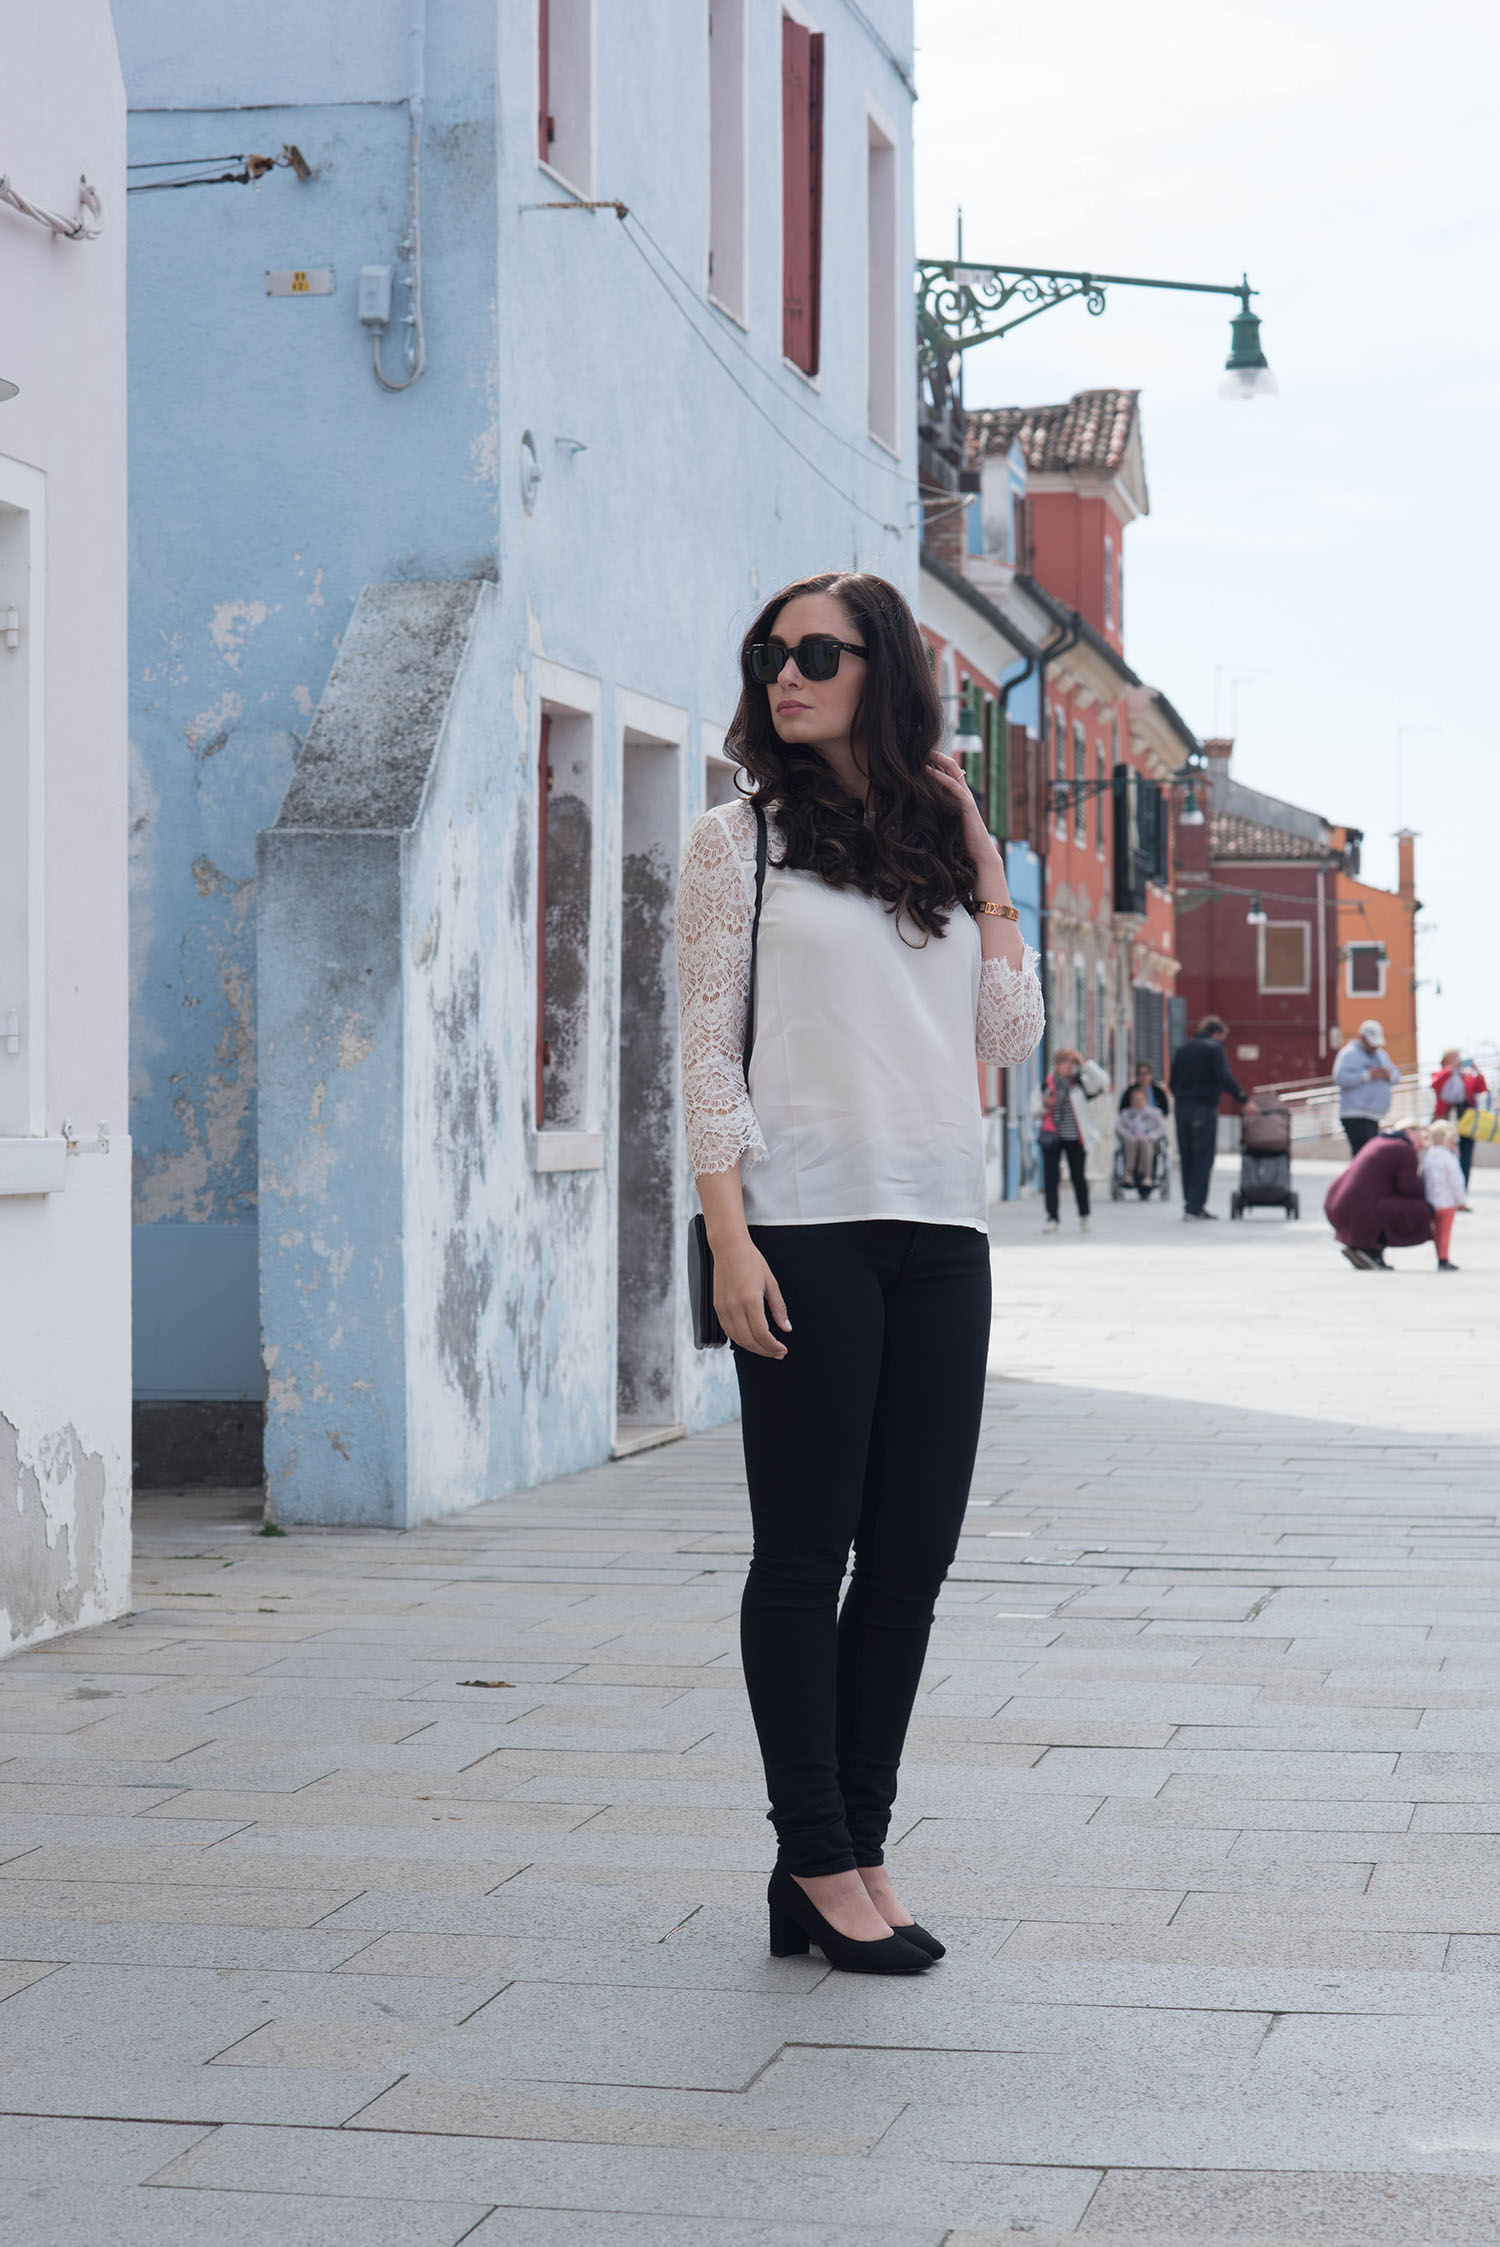 Style blogger Cee Fardoe of Coco & Vera visits Burano wearing Rayban Wayfarer sunglasses and a Sezane lace blouse